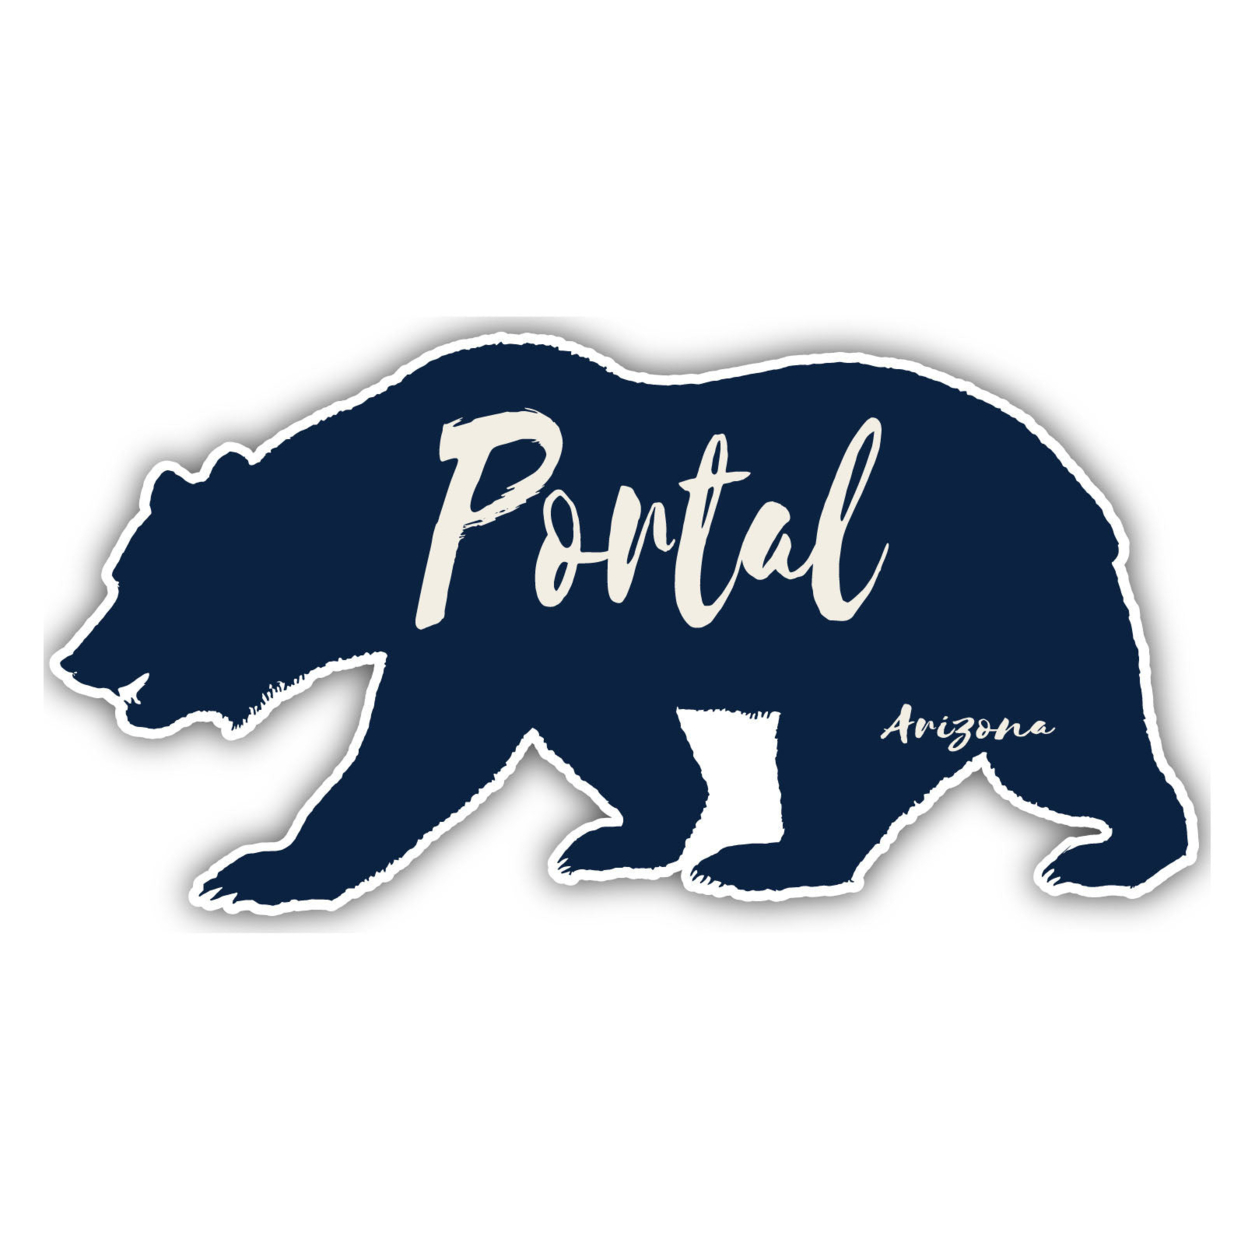 Portal Arizona Souvenir Decorative Stickers (Choose Theme And Size) - Single Unit, 4-Inch, Bear